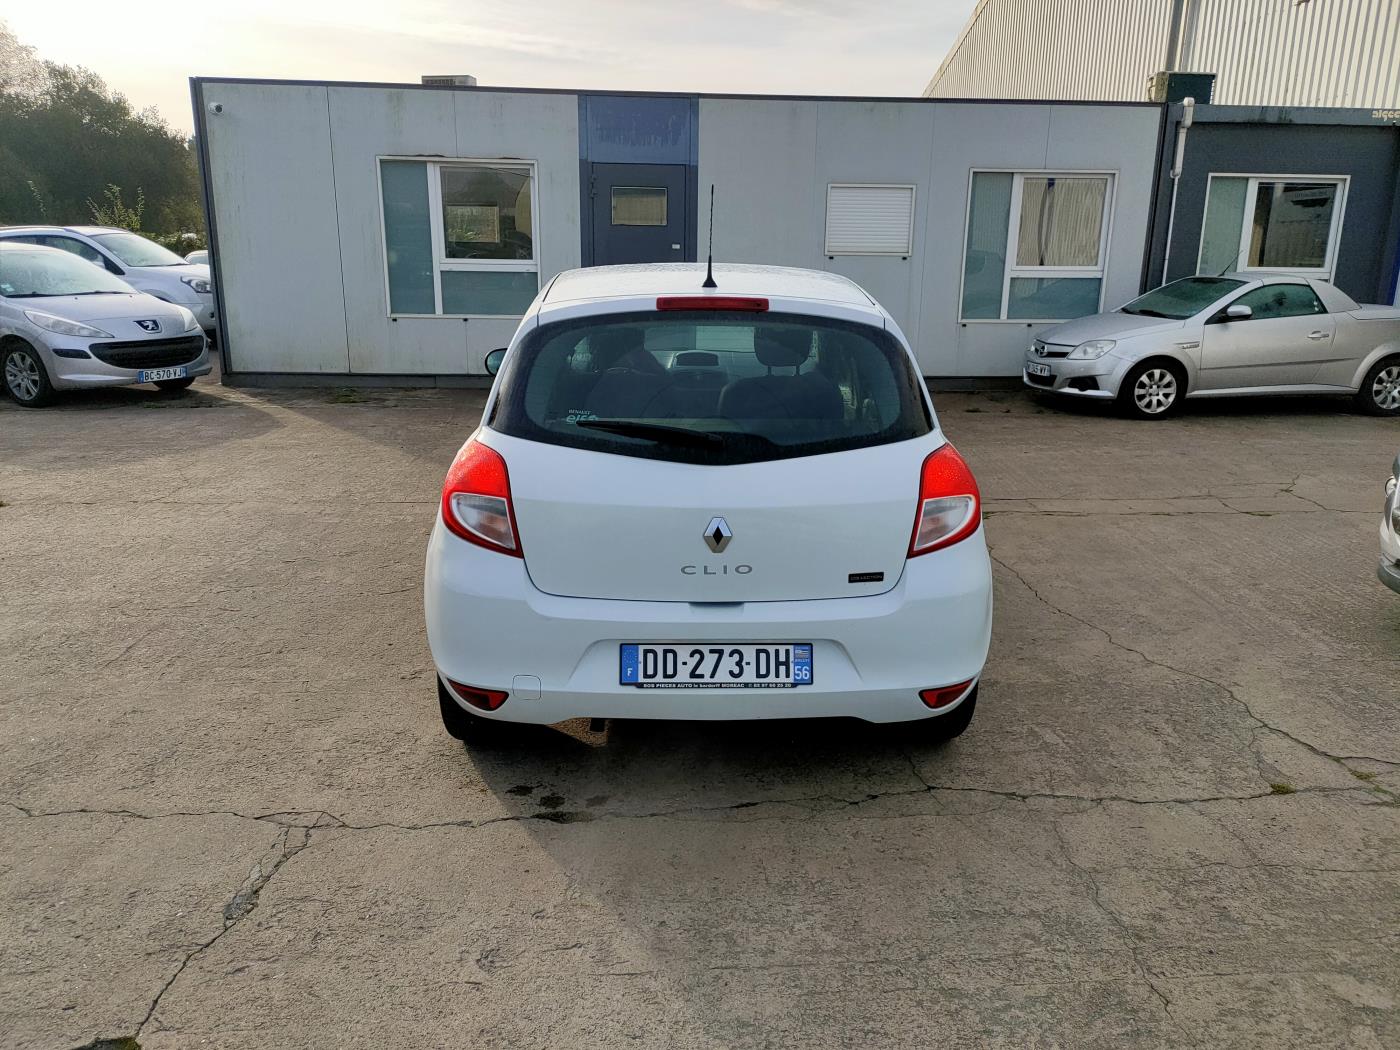 Renault Clio lV 1.2 75 ch Zen - Voitures